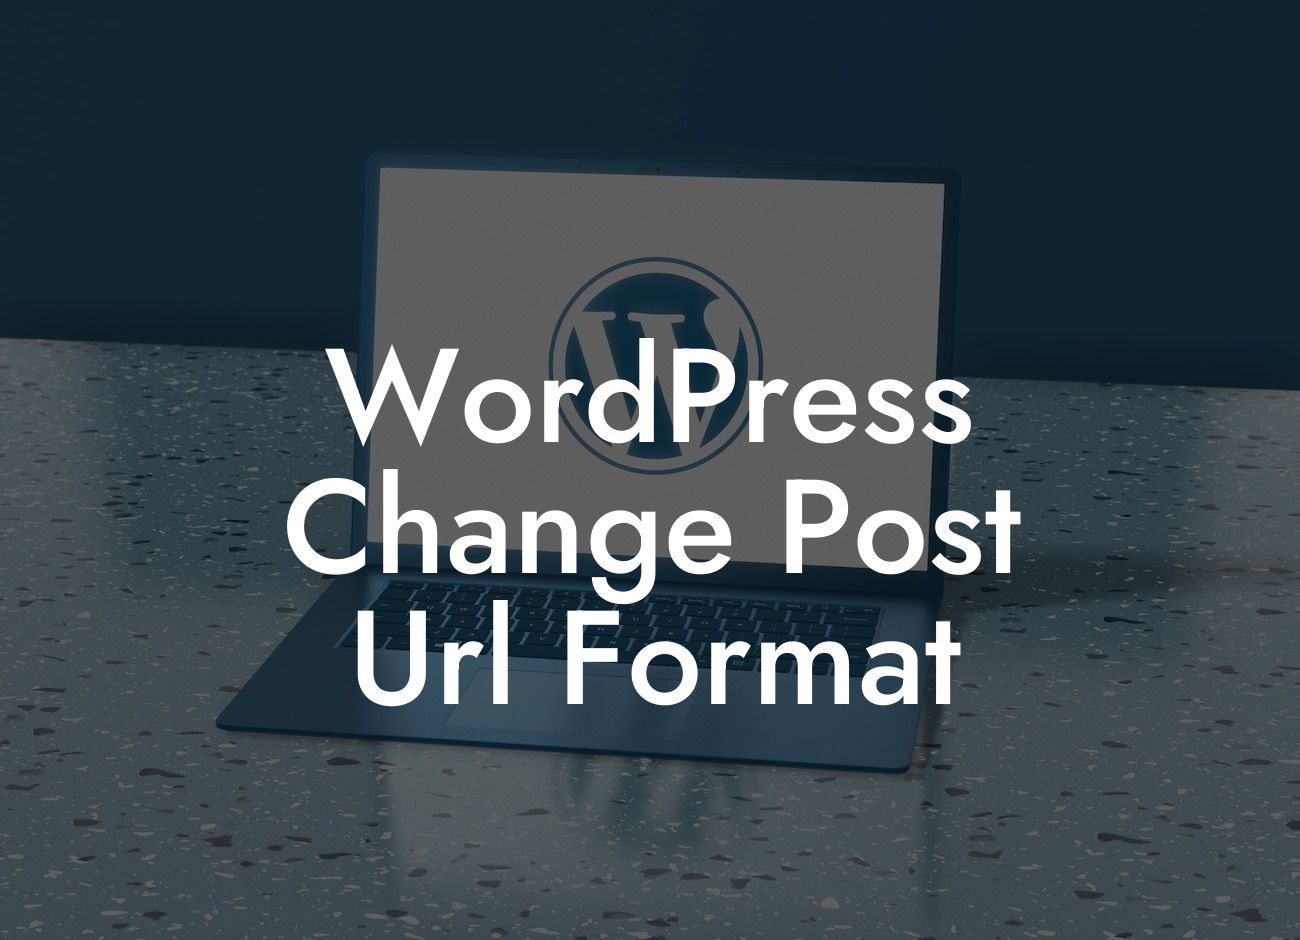 WordPress Change Post Url Format